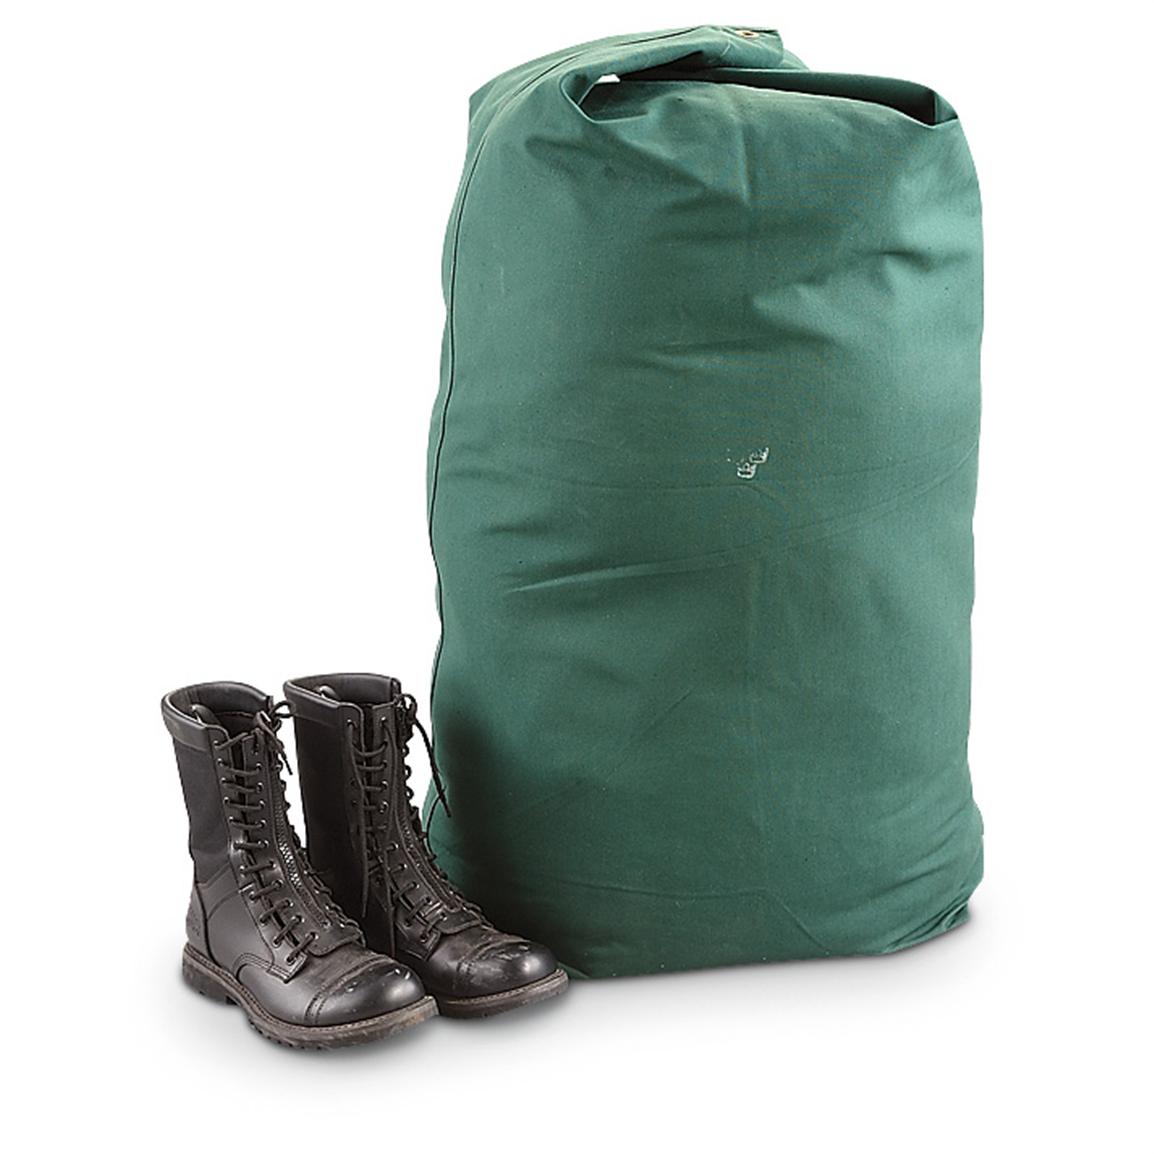 New Swedish Military Surplus XL Duffel Bag, Green - 222866, Duffle Bags at Sportsman&#39;s Guide